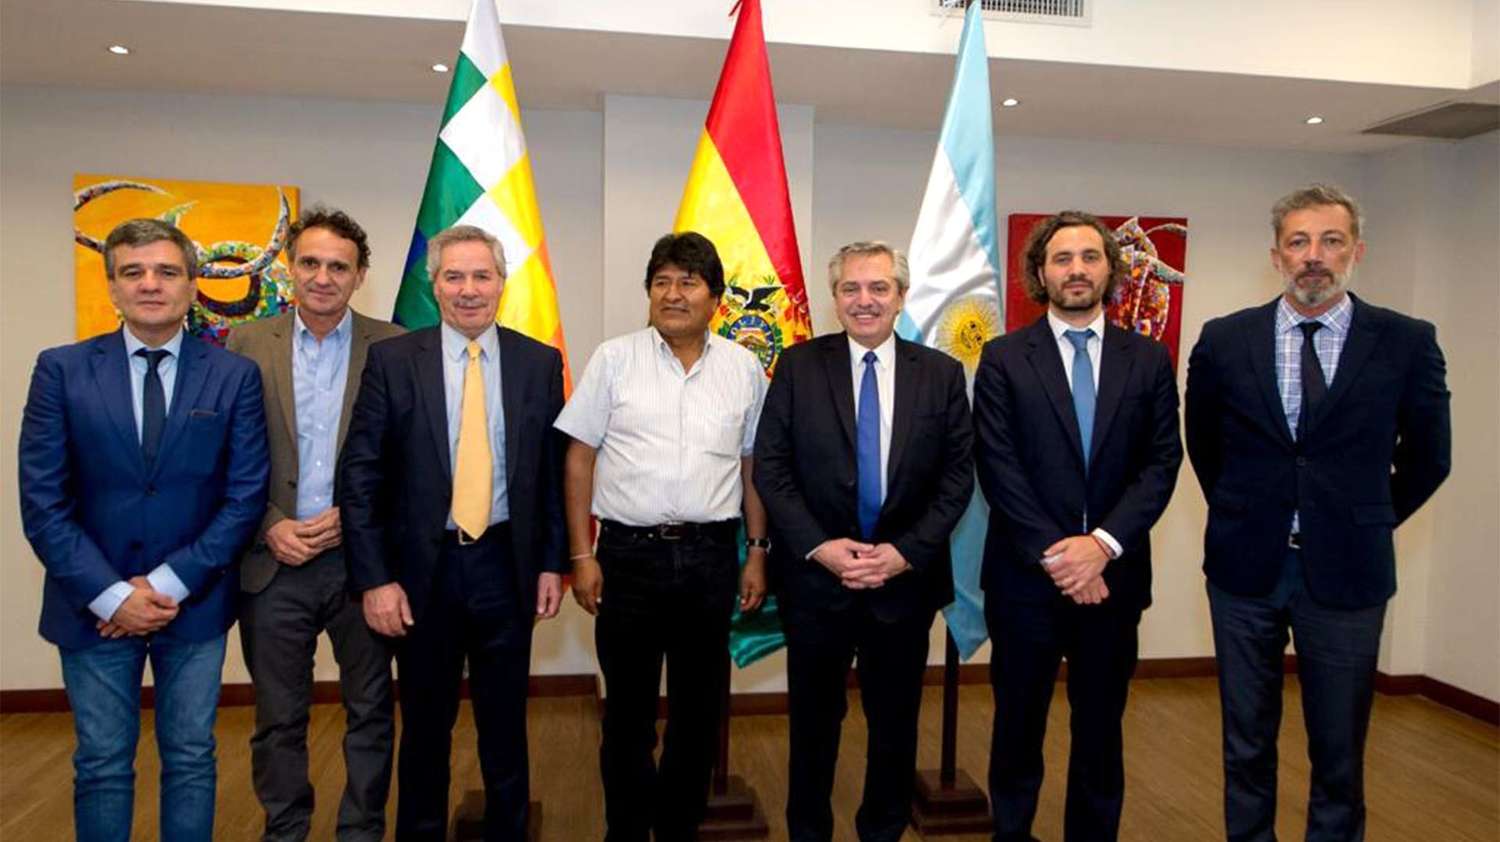 Alberto Fernández apoyó a Evo Morales: "Se ha consumado un golpe de Estado"